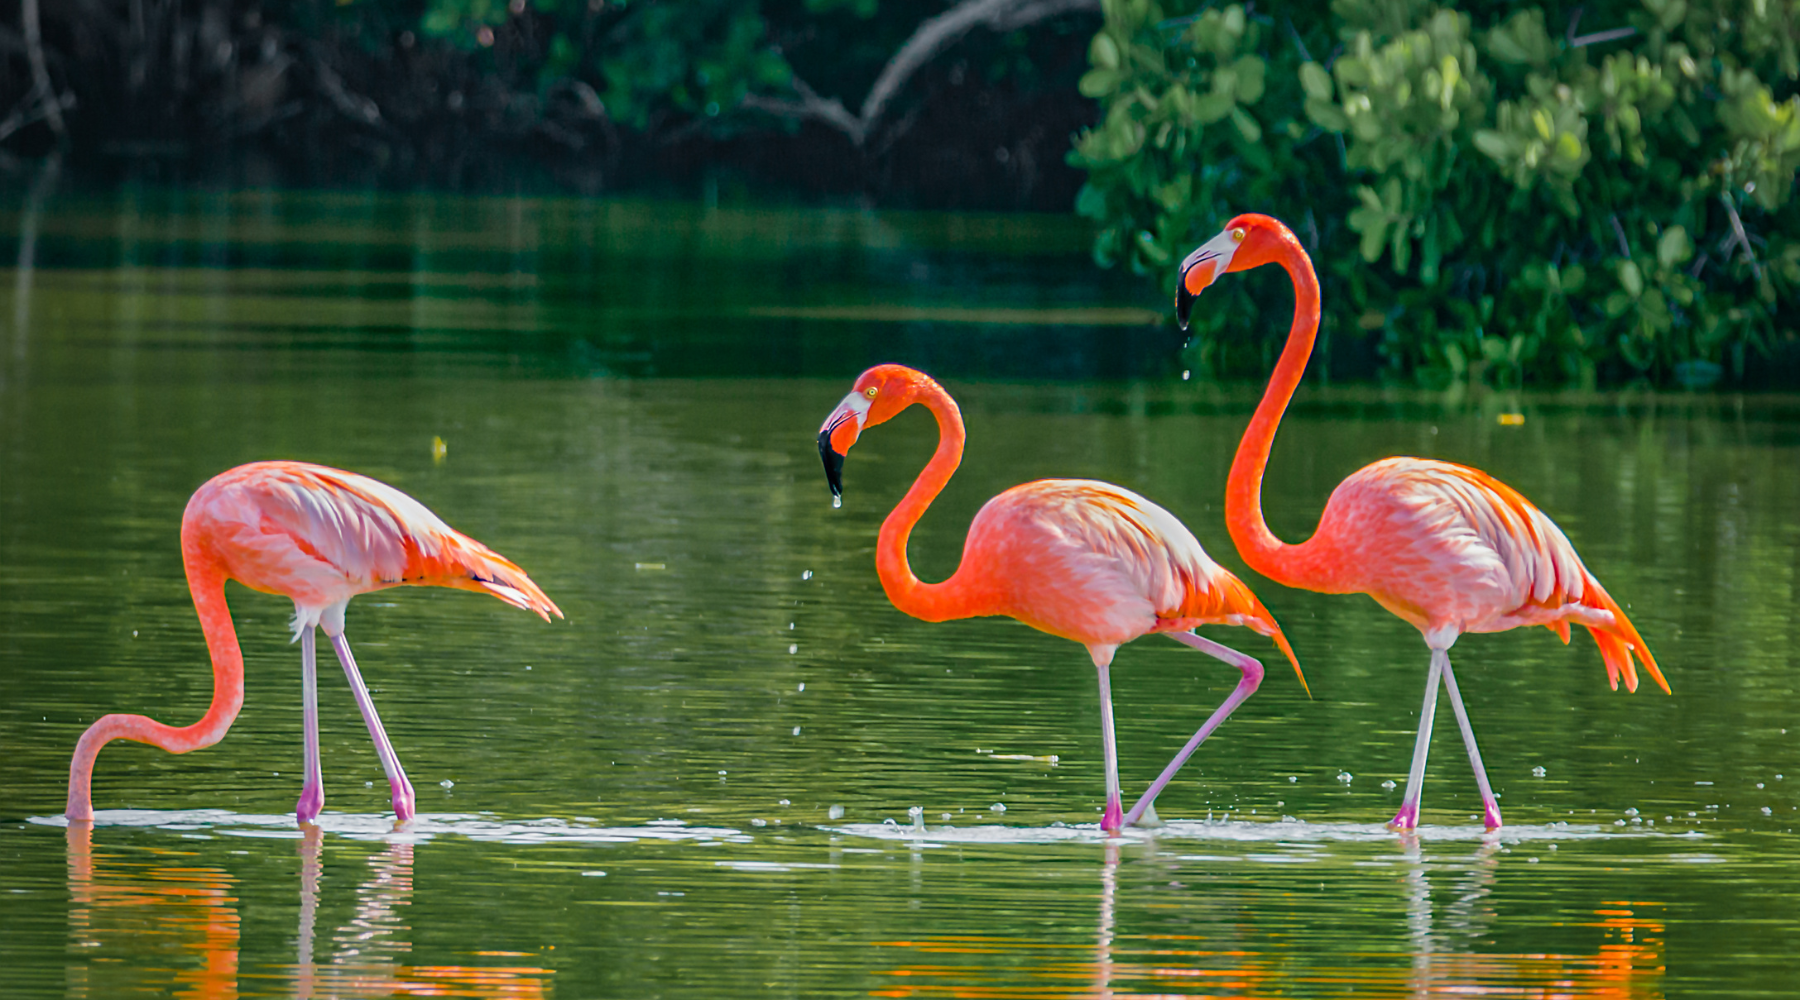 Flamingo fun facts - 3 flamingos